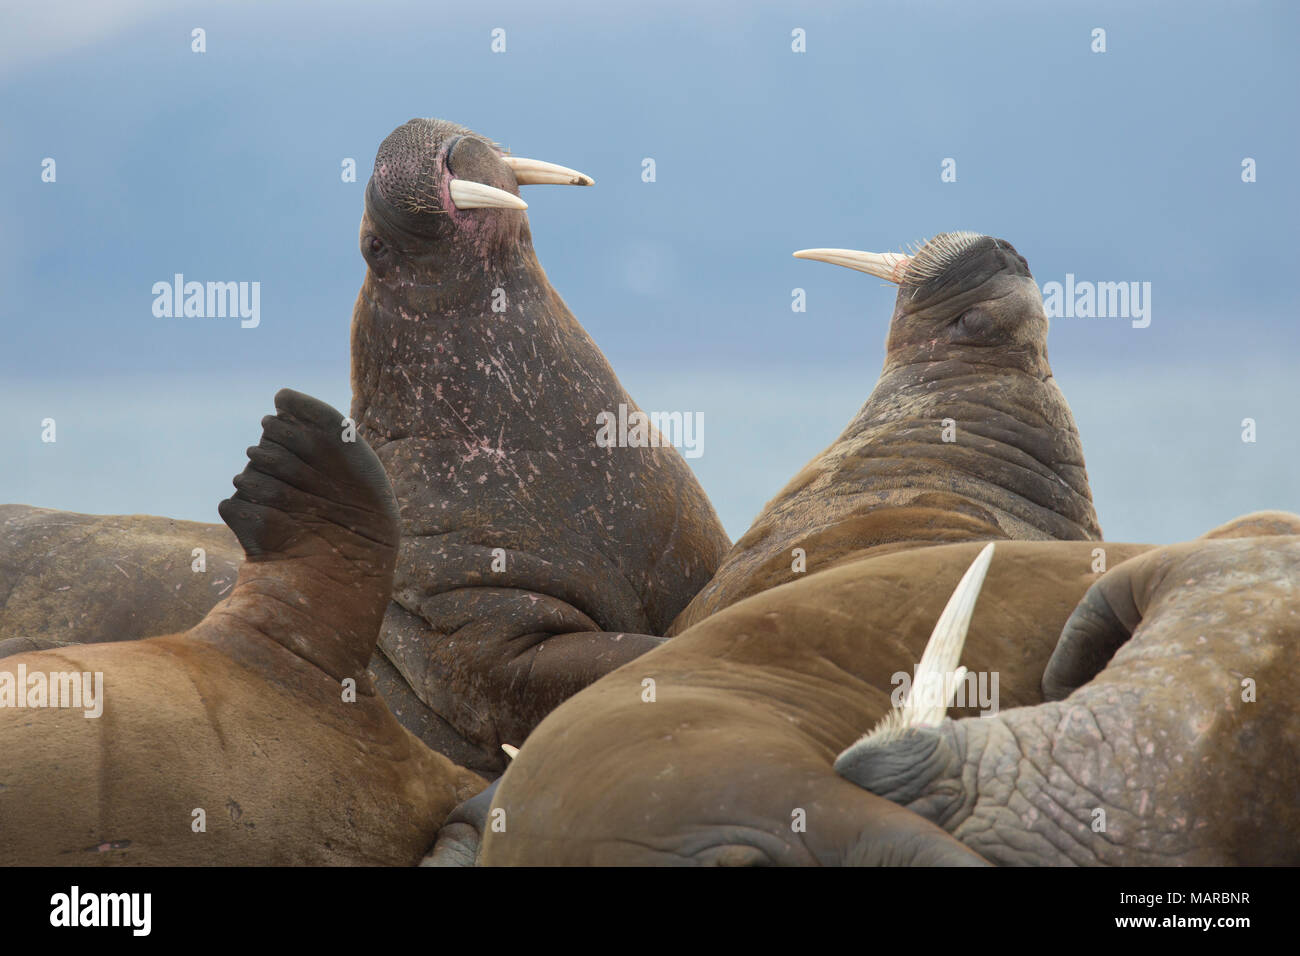 Atlantic Walrus (Odobenus rosmarus). Two males squabbling on a beach. Svalbard, Norway Stock Photo